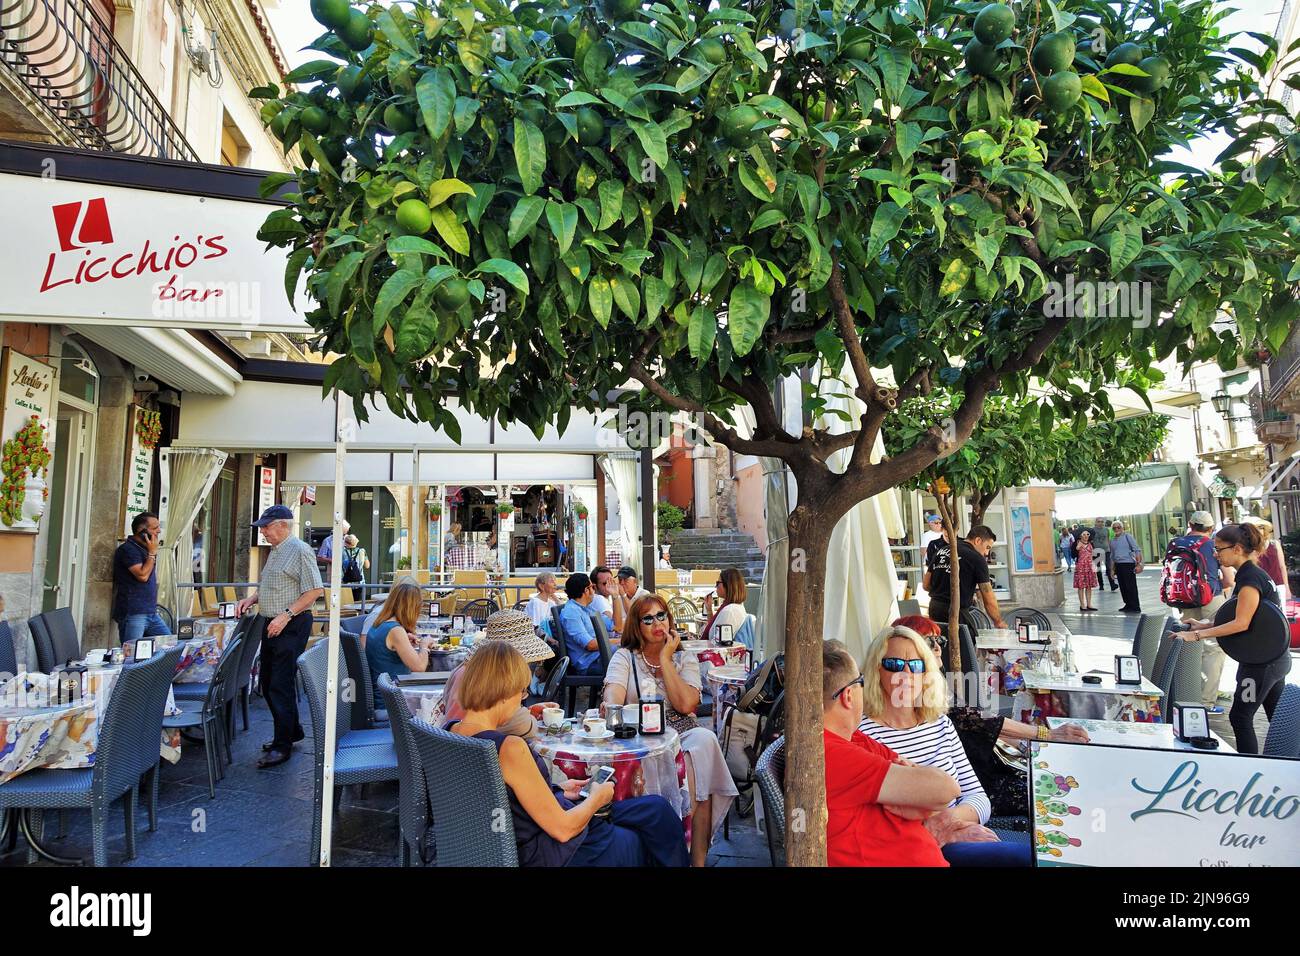 Pavement cafe, Licchio's Bar, Taormina, Palermo, Sicily, Italy, Europe Stock Photo